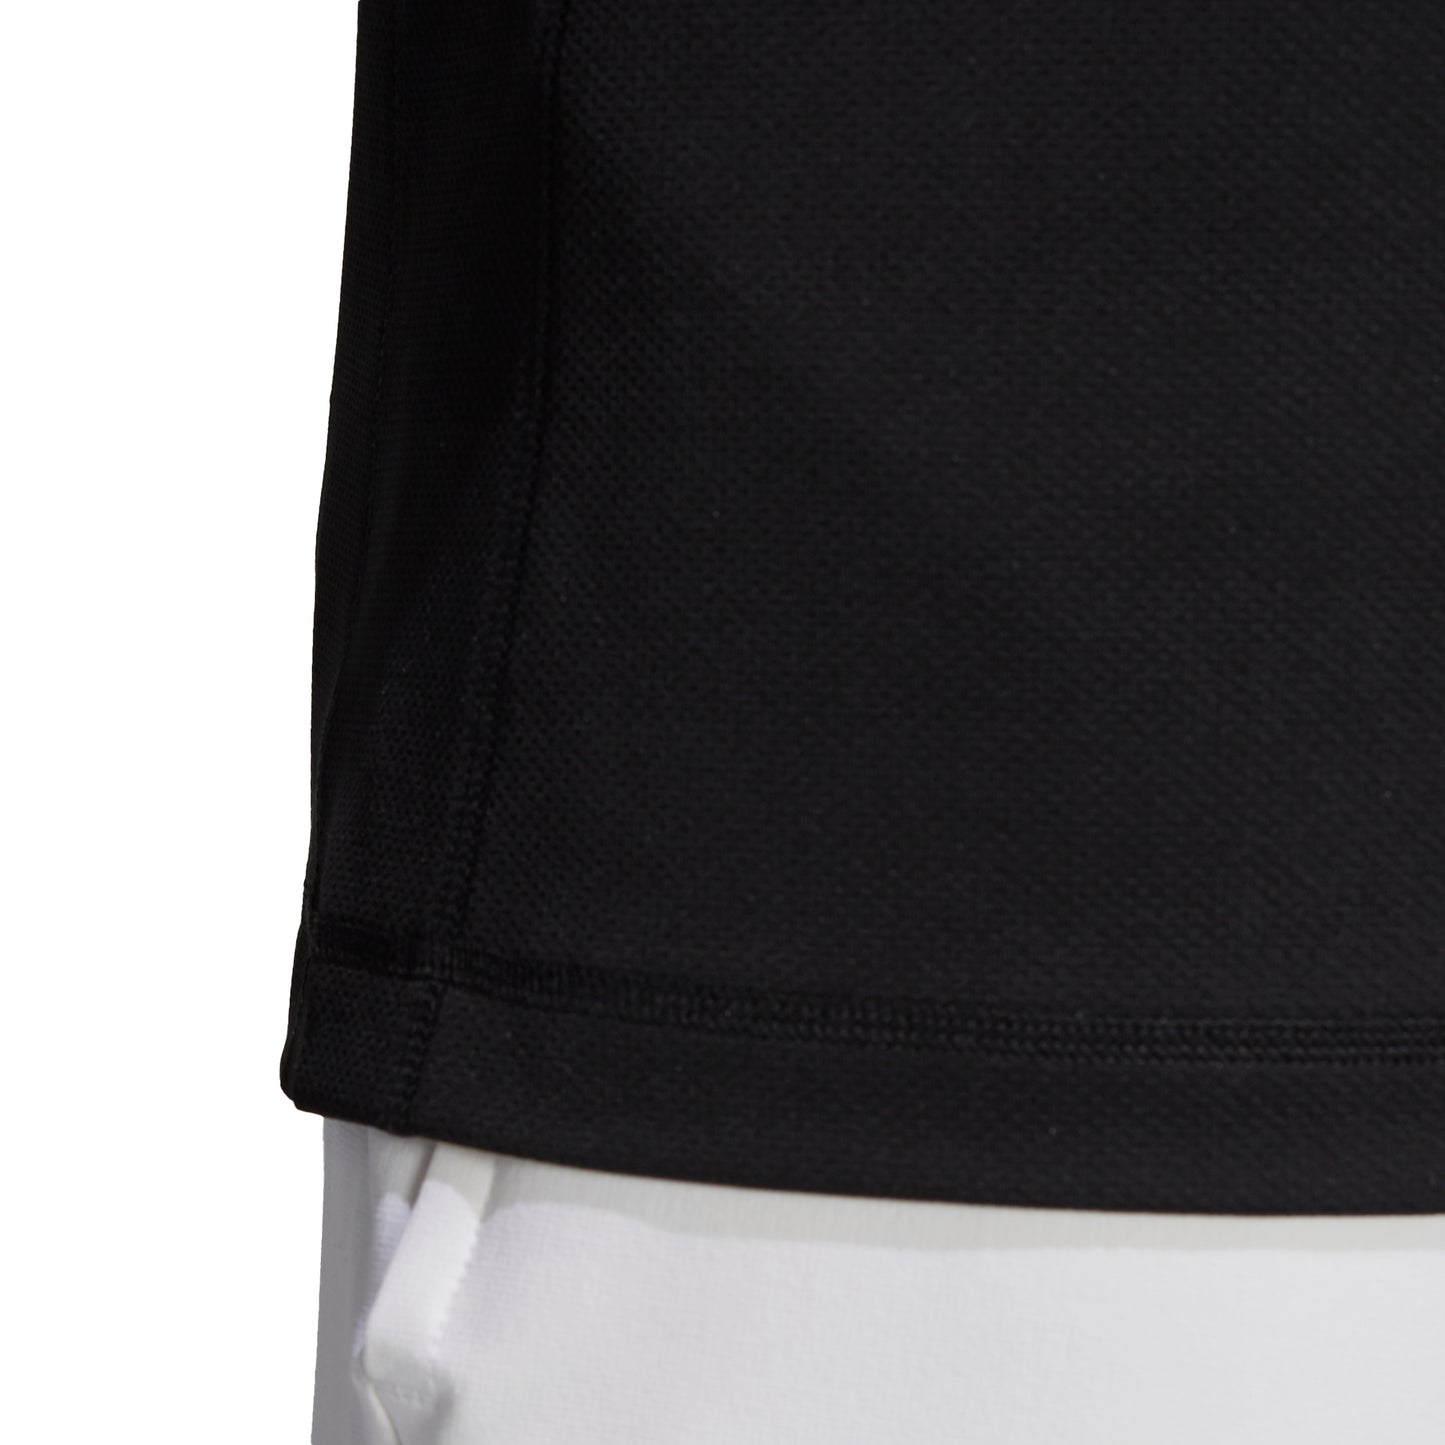 adidas Men's Polo Limited Edition - Black FI8186 - VuTennis